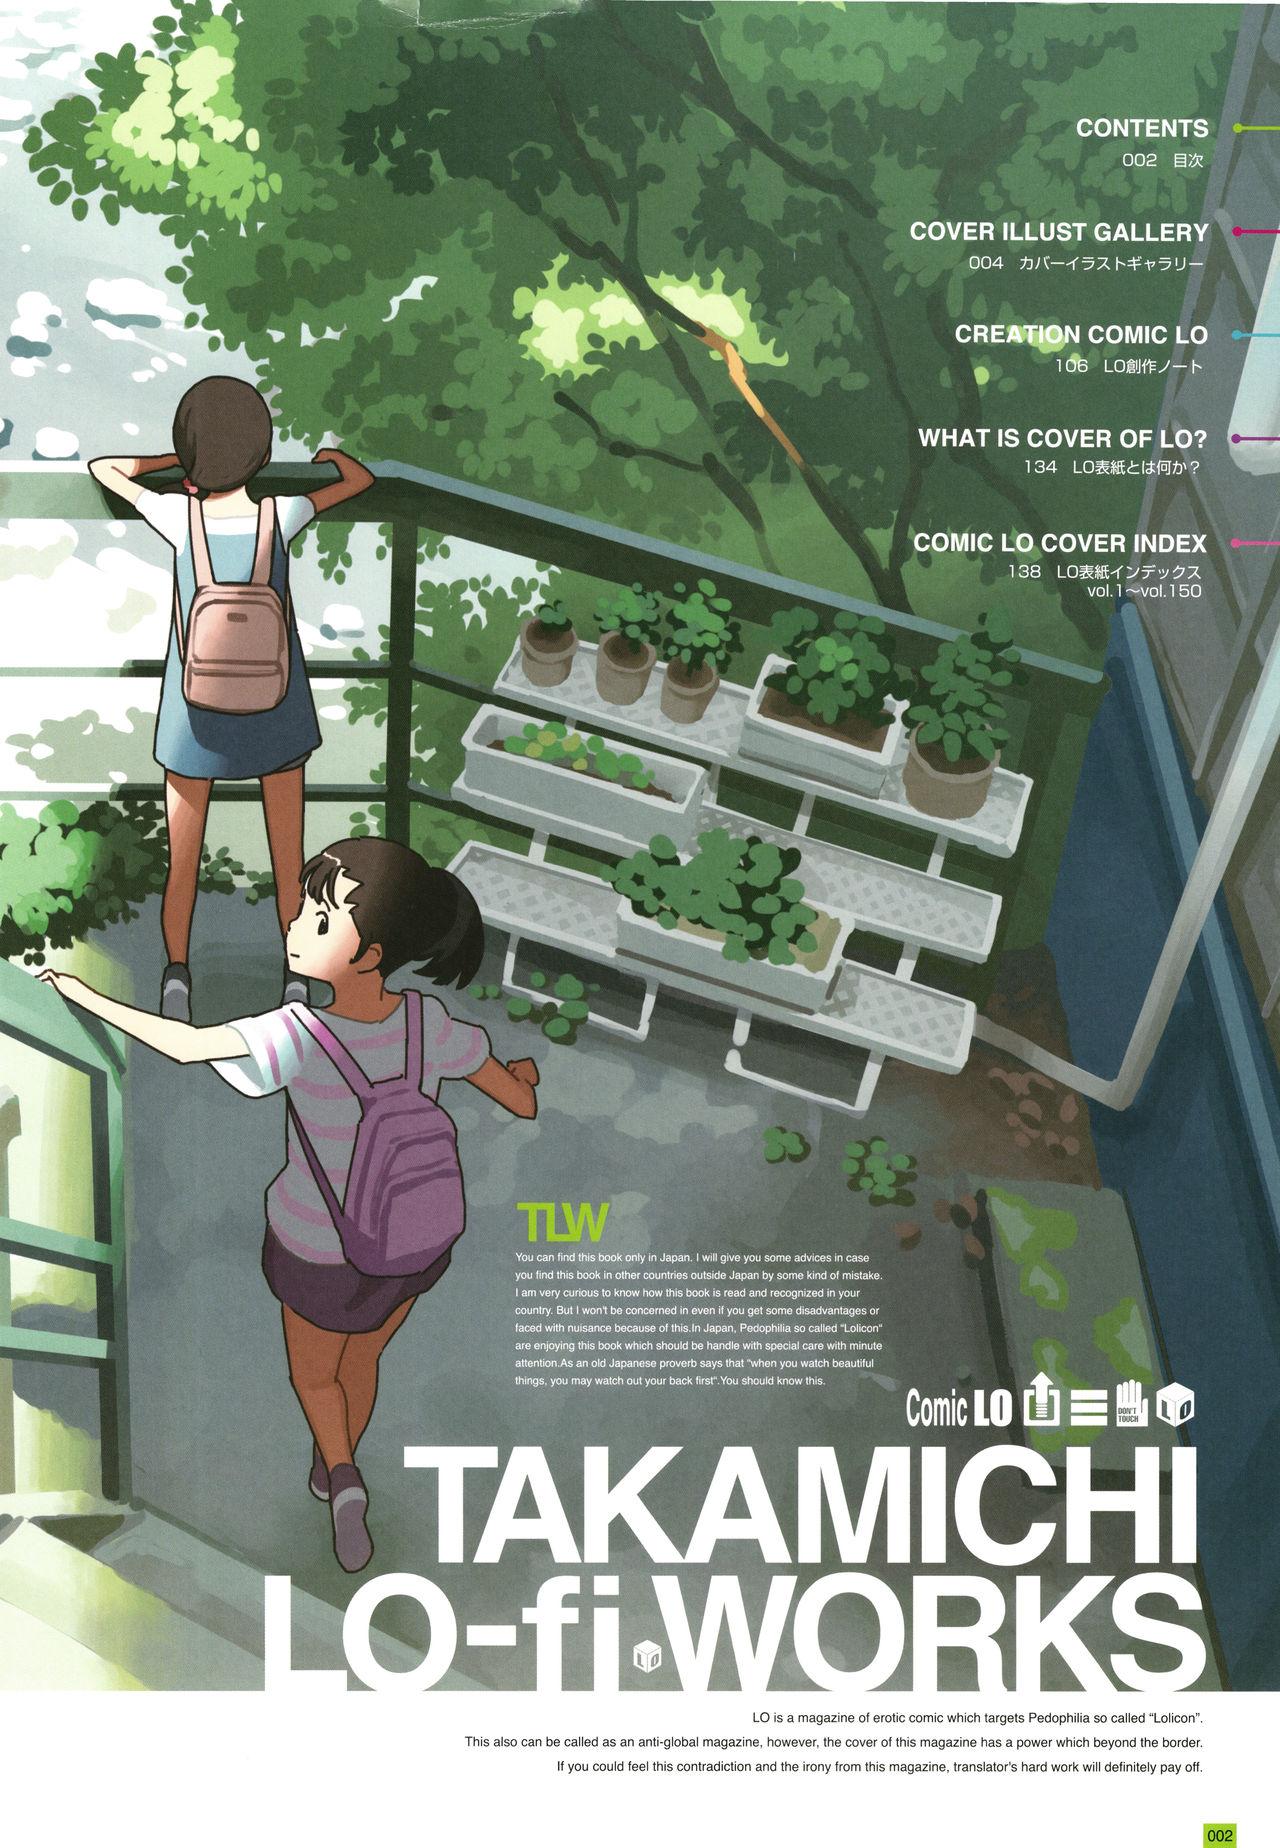 [Takamichi] LO Artbook 2-B TAKAMICHI LO-fi WORKS 4